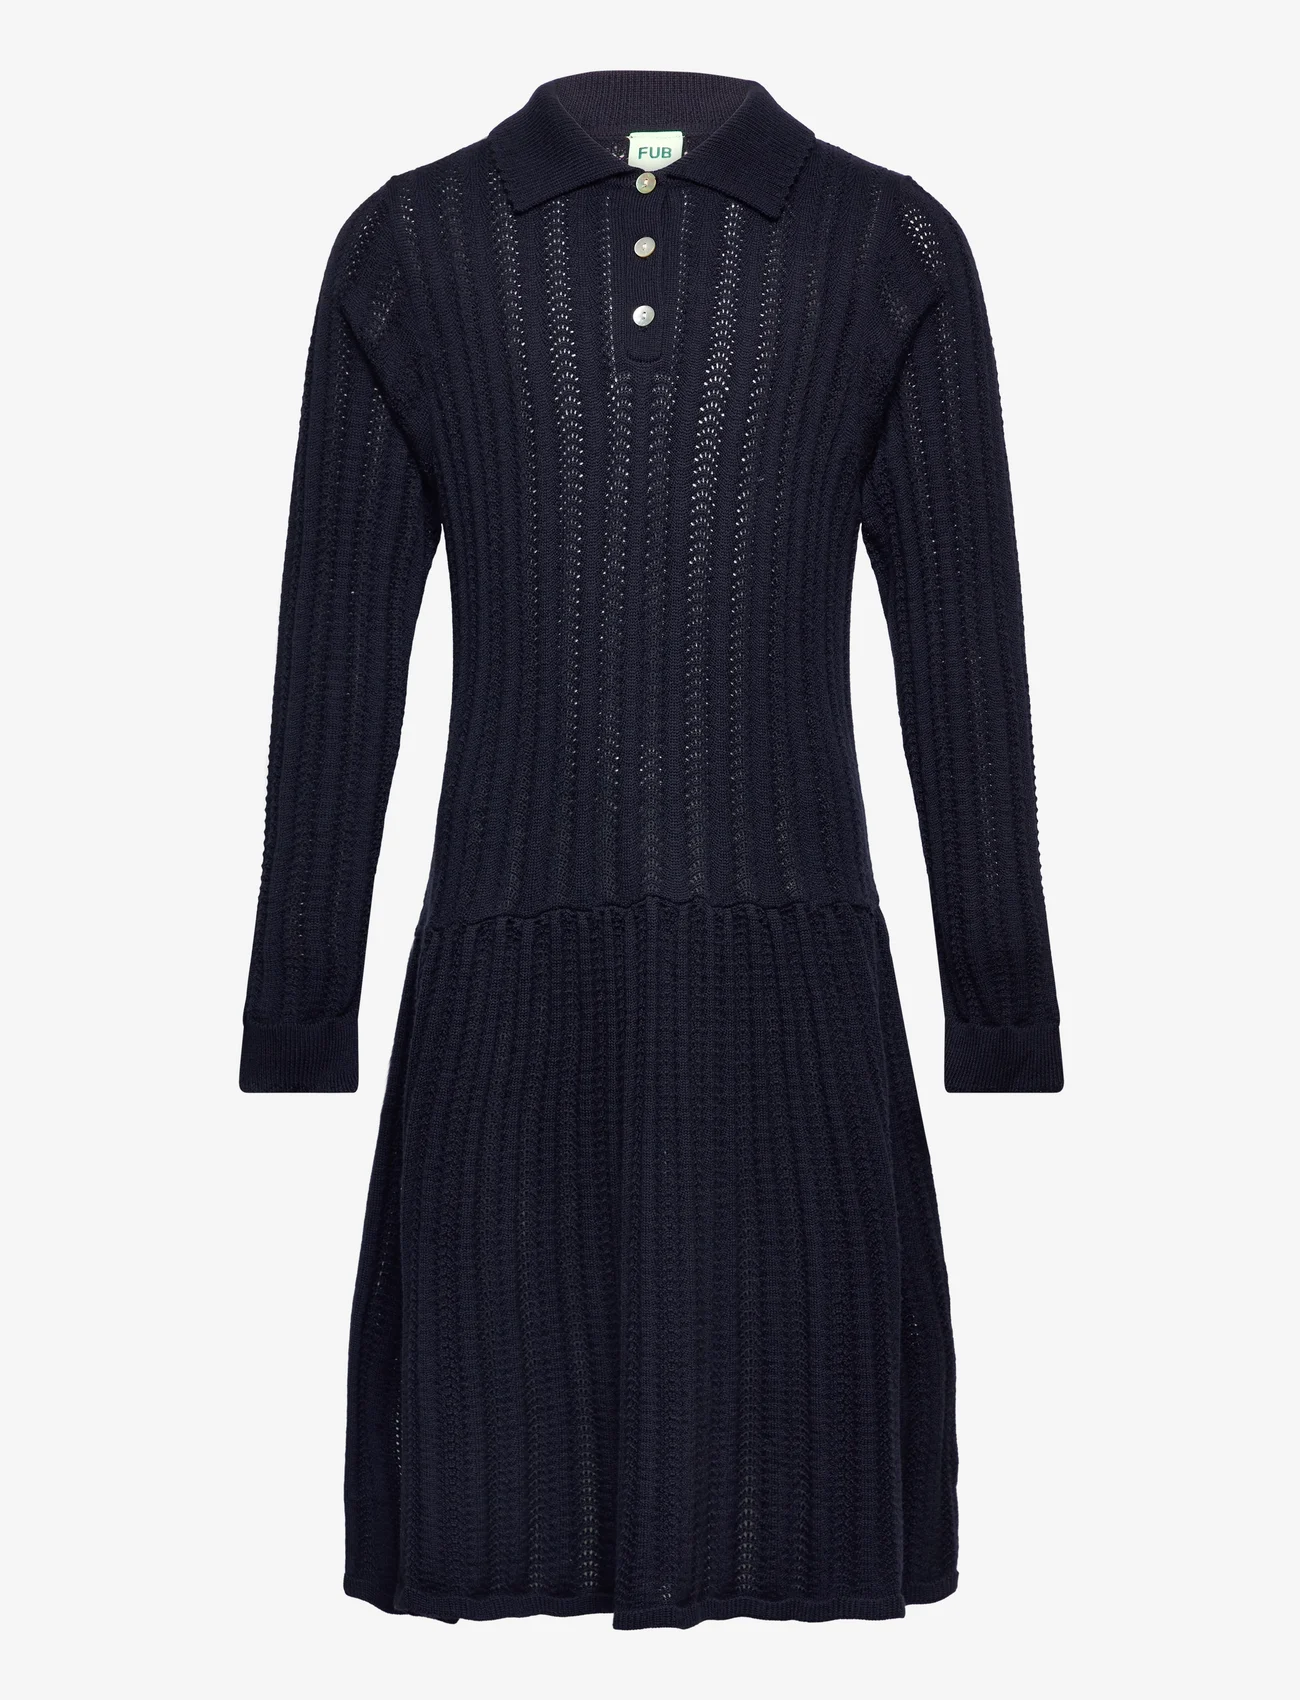 FUB - Pointelle Dress - long-sleeved casual dresses - dark navy - 0